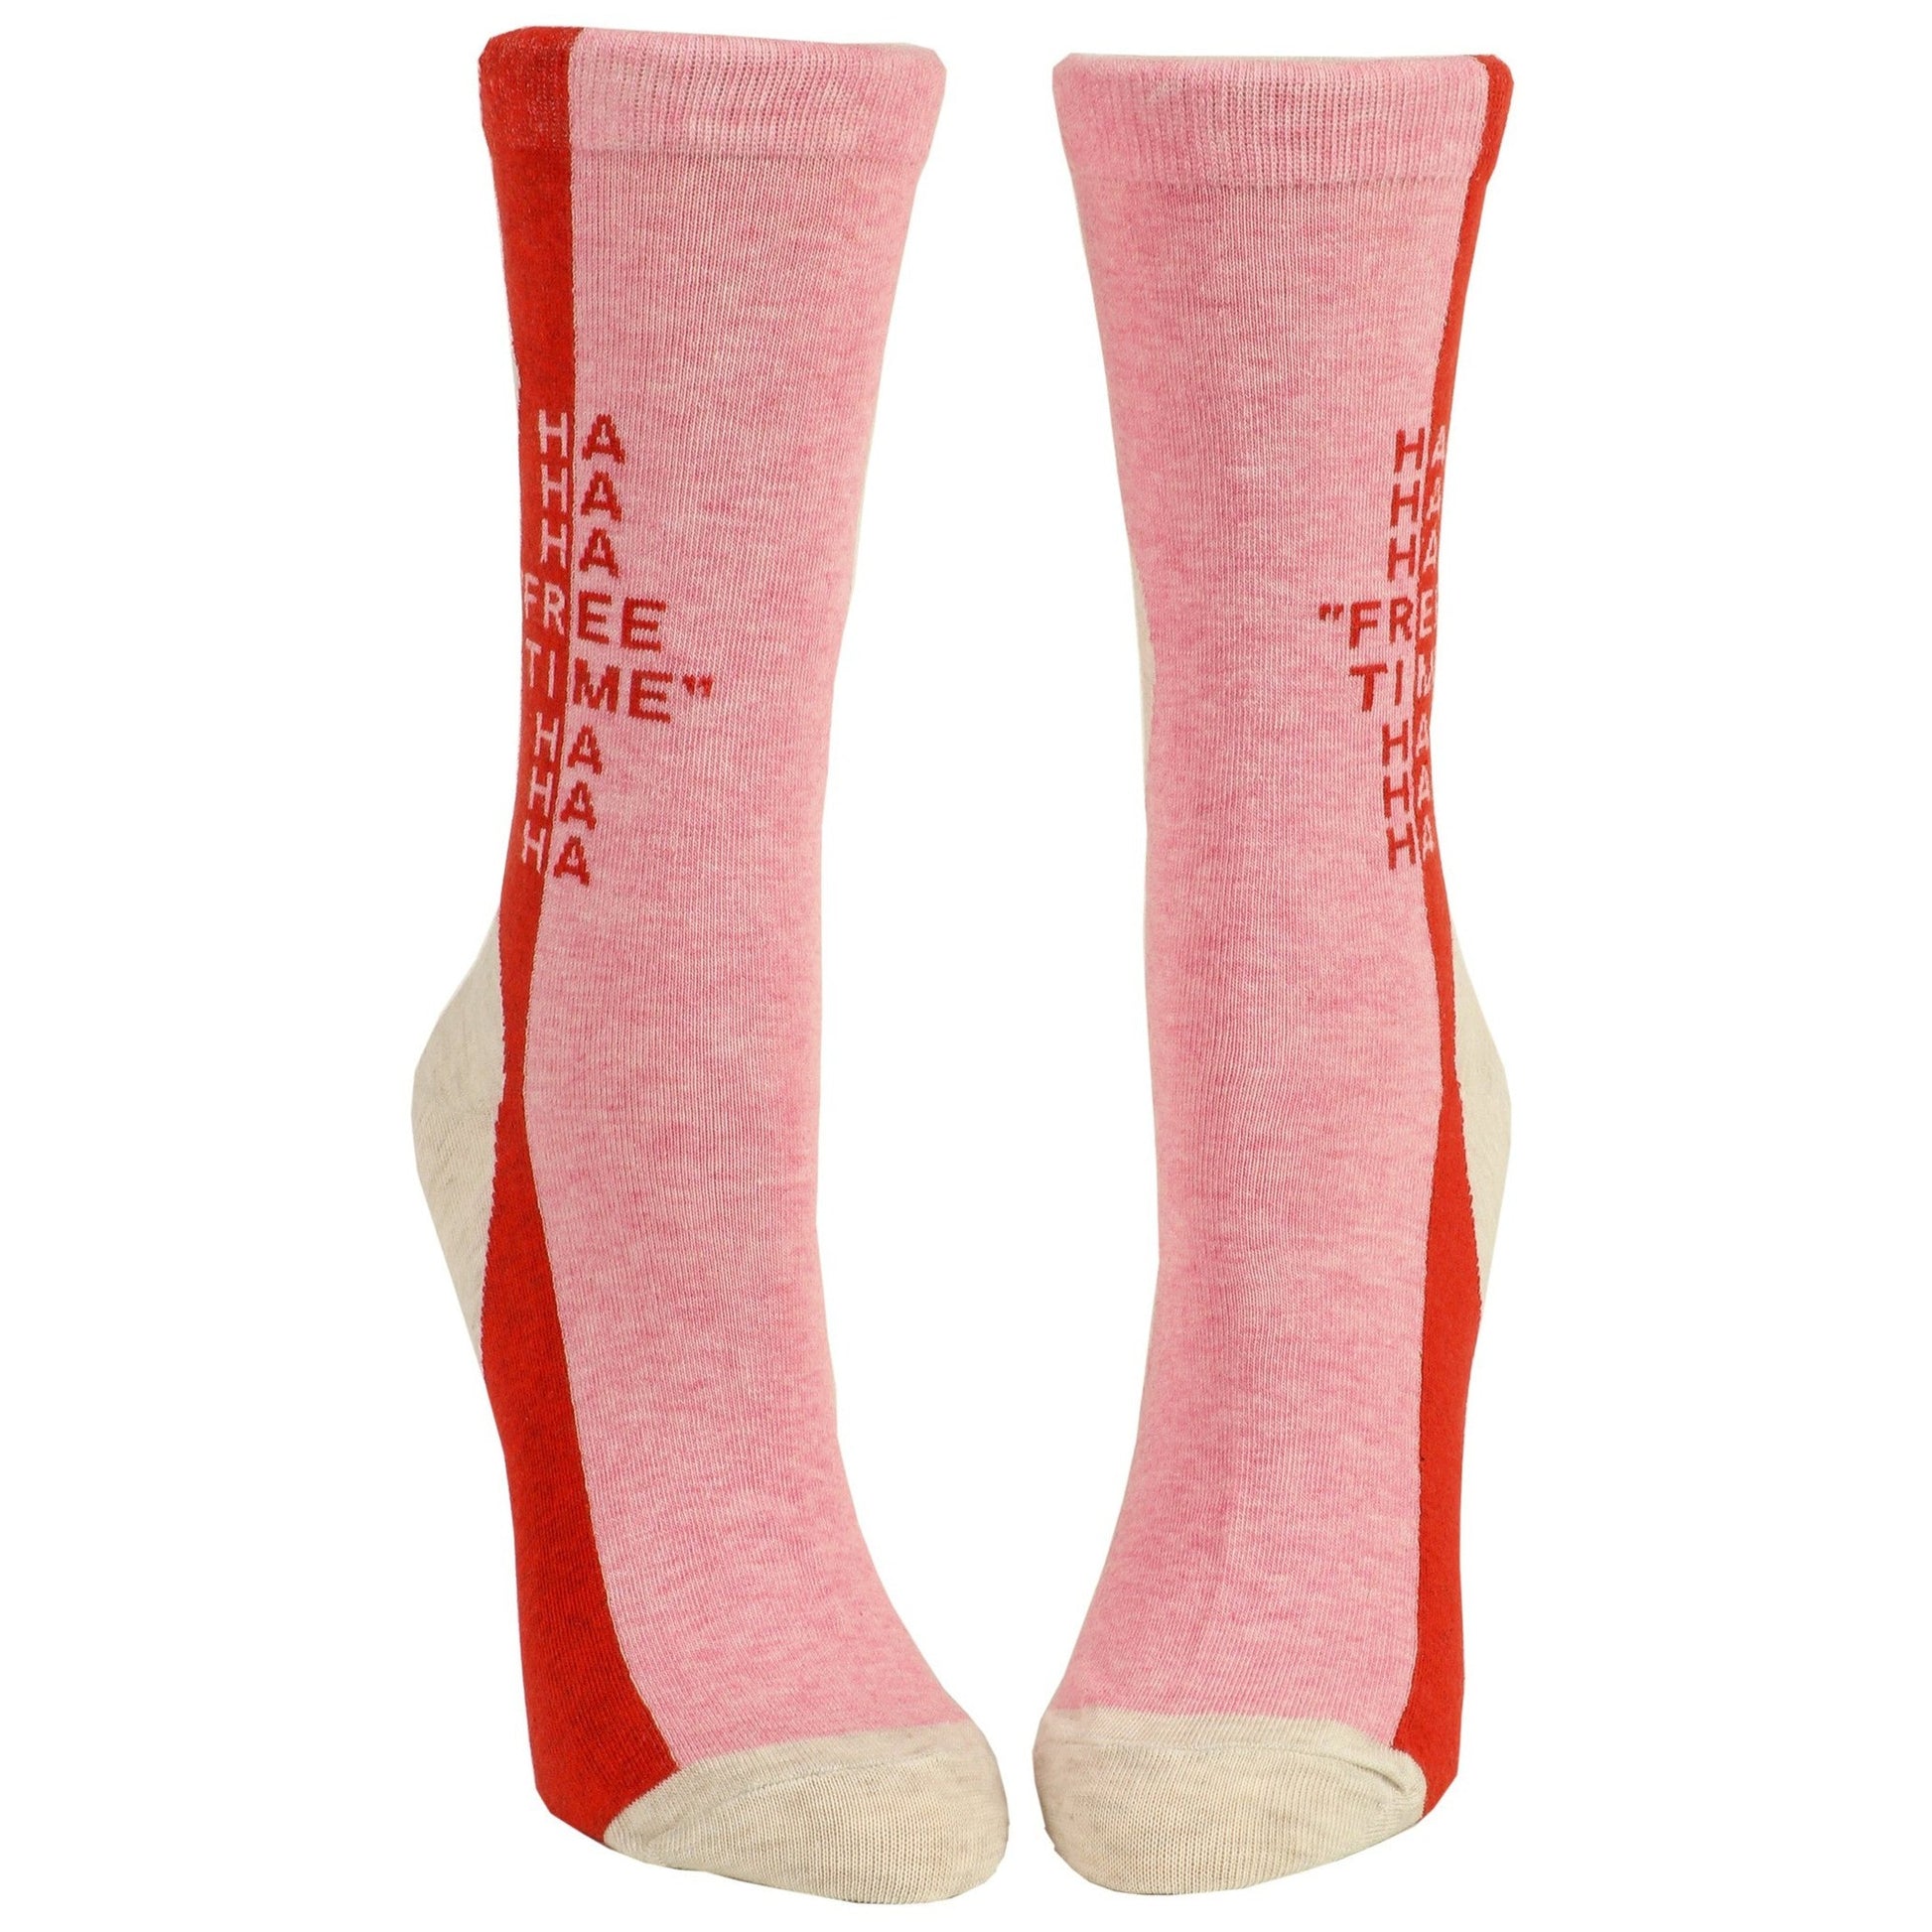 Free Time Ha Ha Ha Women's Crew Novelty Socks in Red and Pink